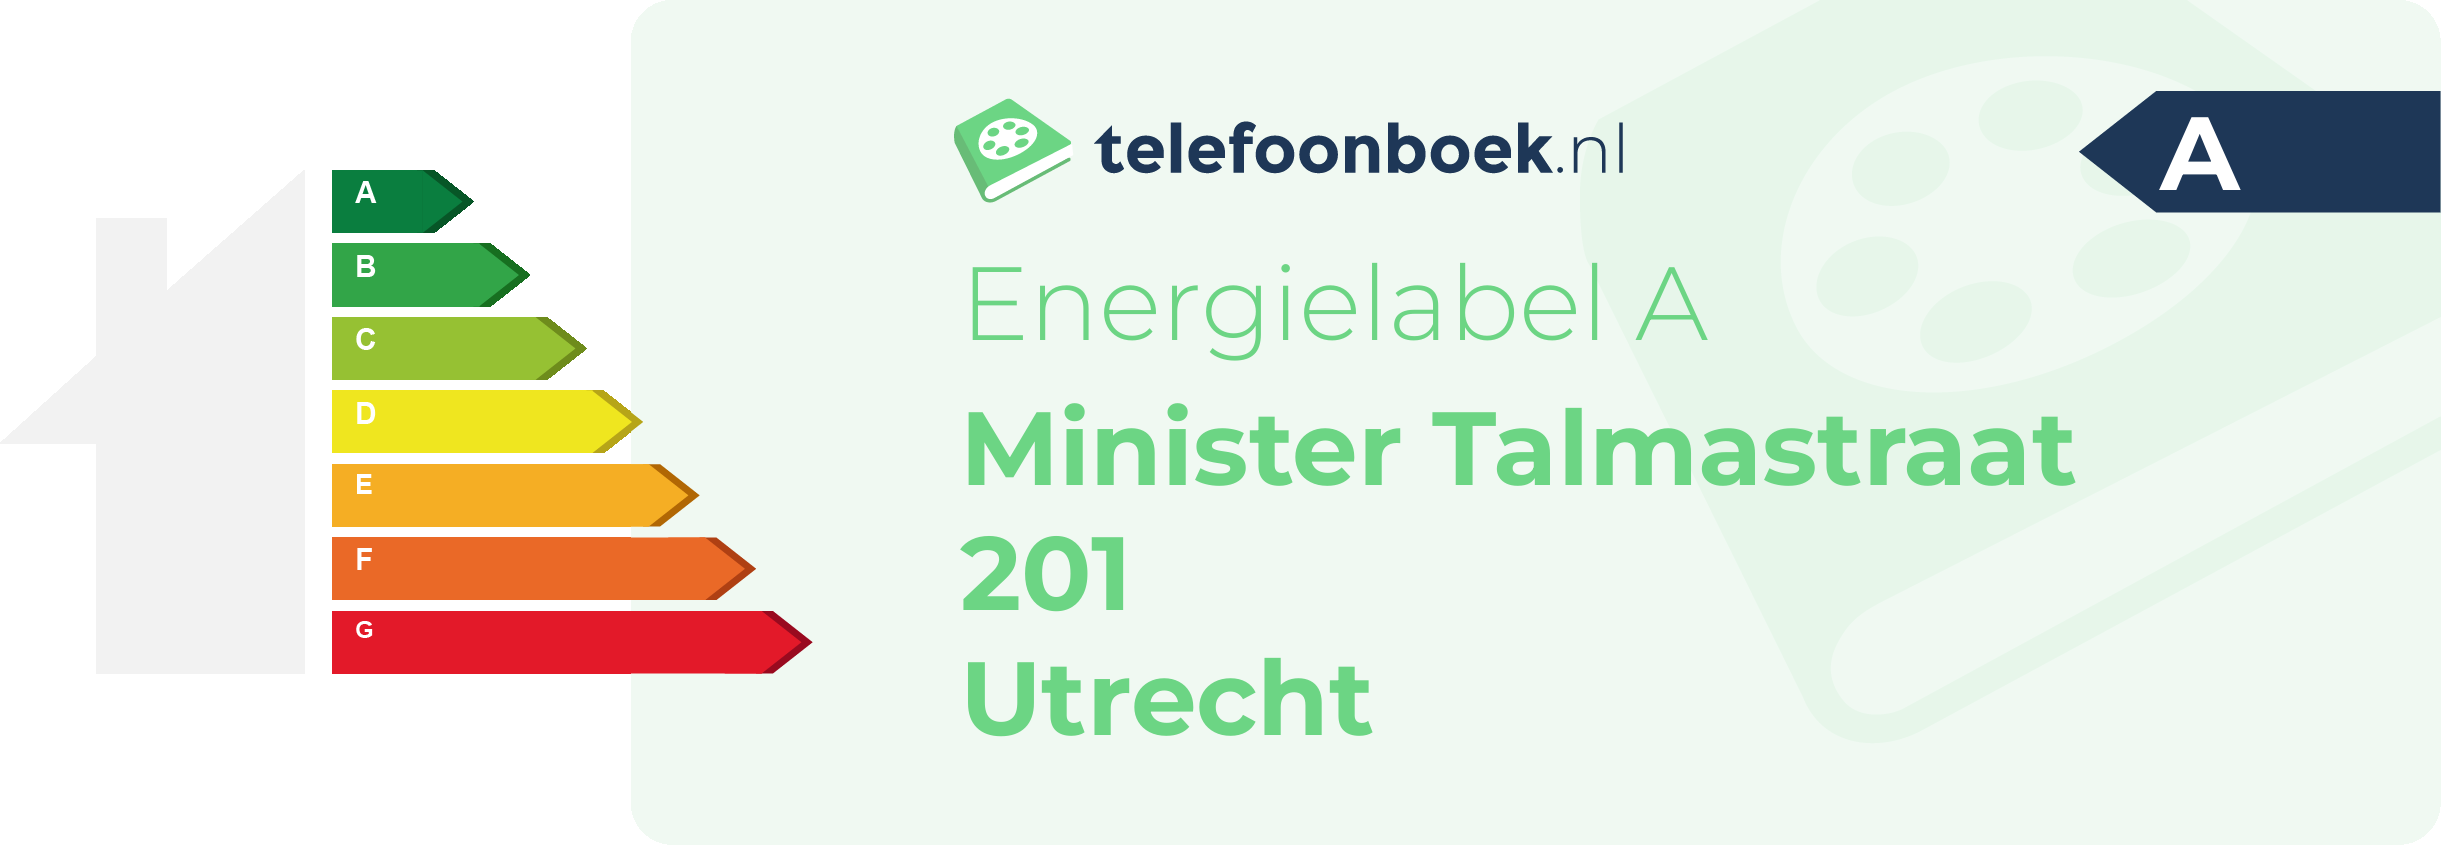 Energielabel Minister Talmastraat 201 Utrecht